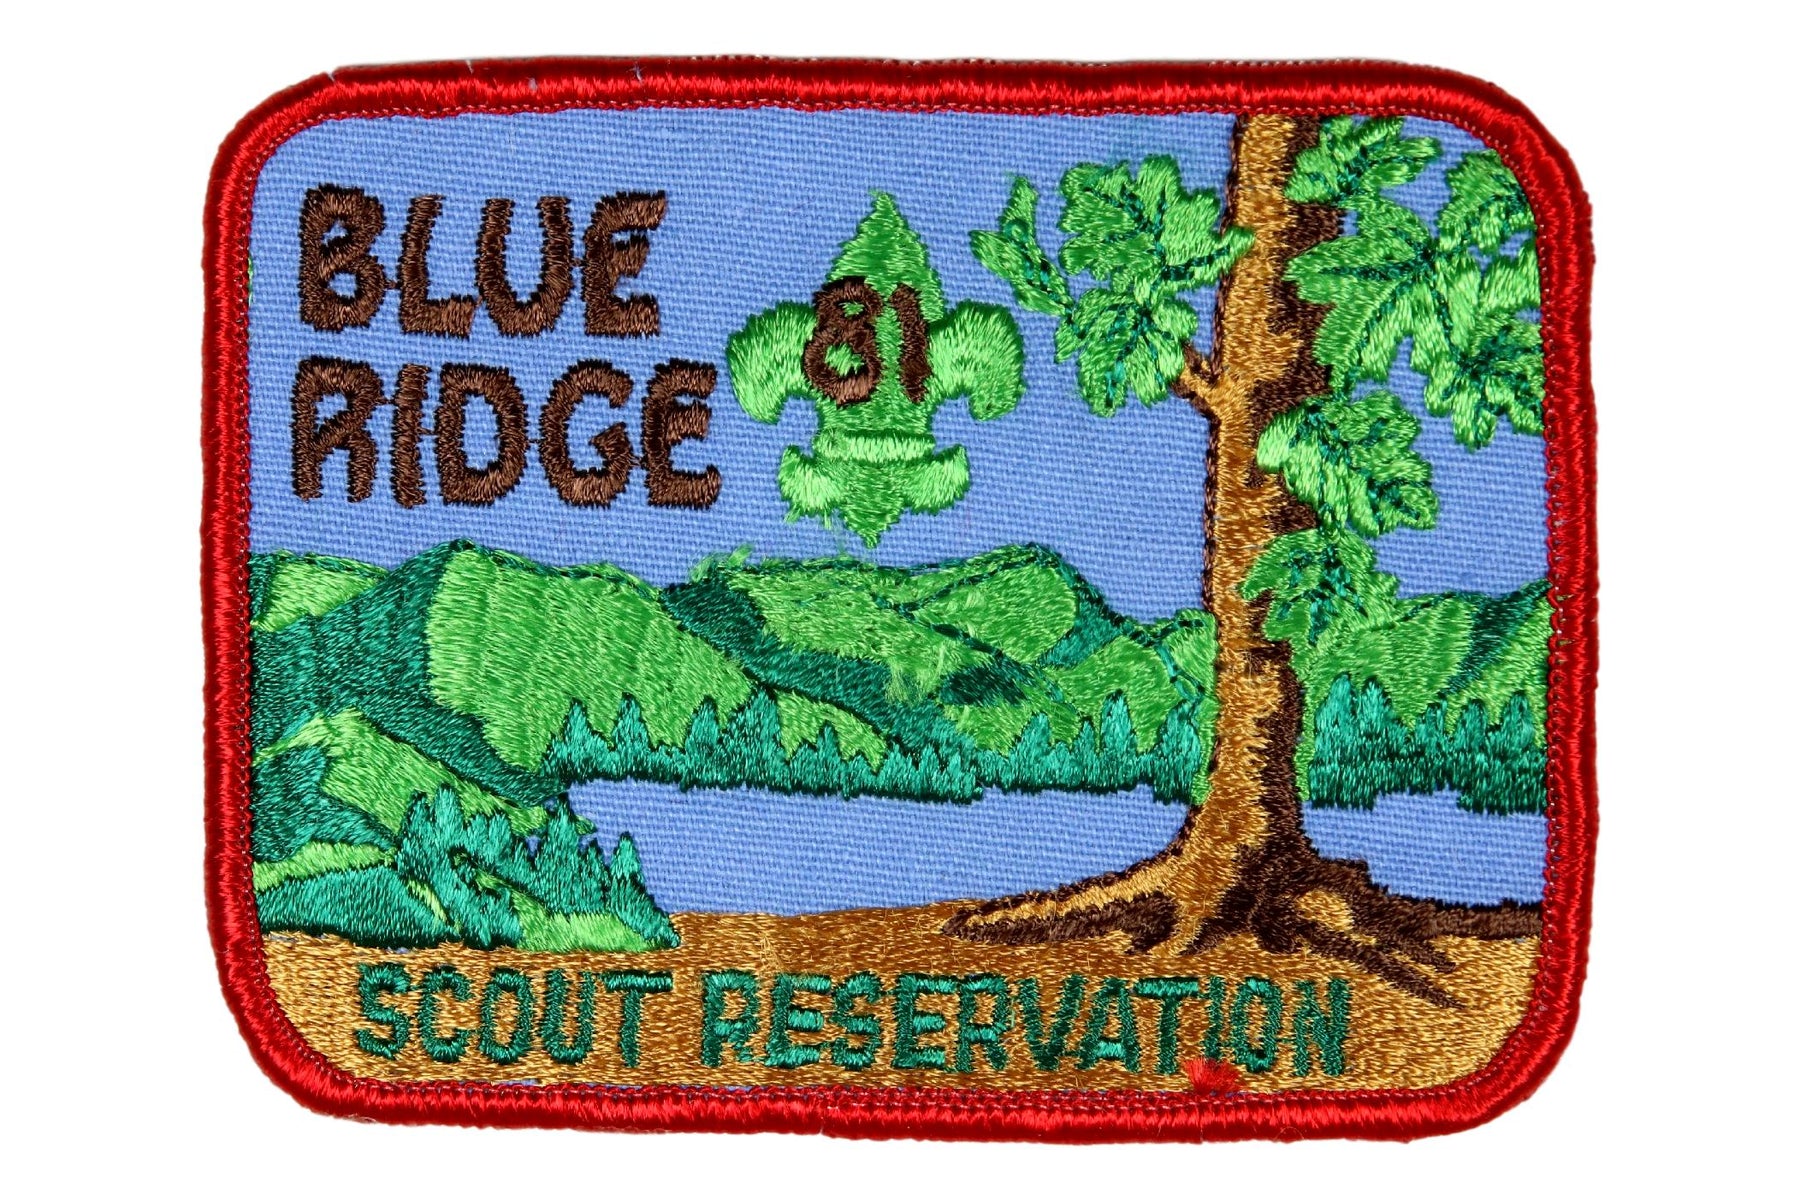 1981 Blue Ridge Scout Reservation Patch